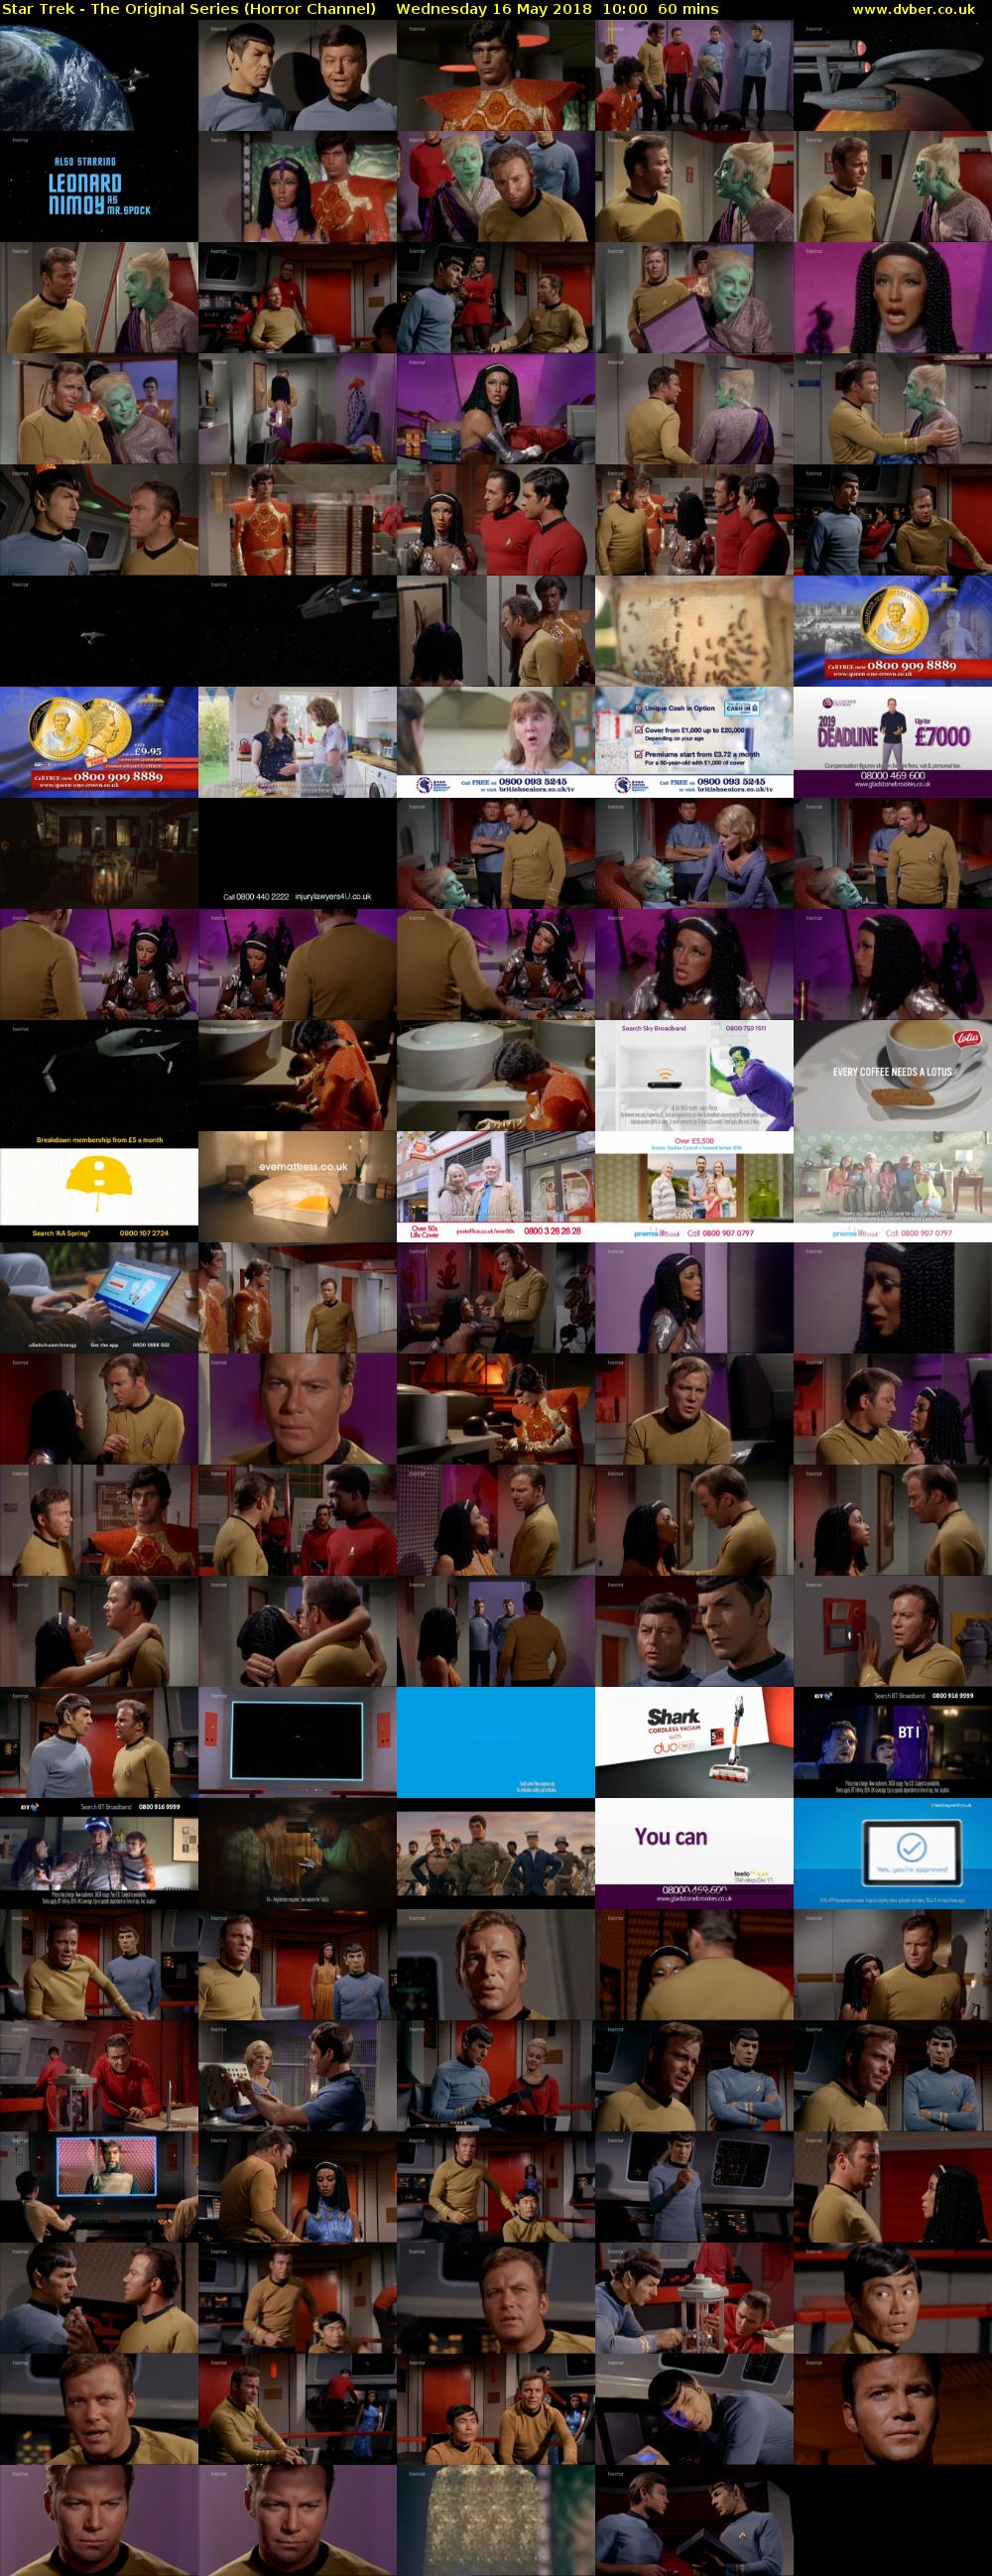 Star Trek - The Original Series (Horror Channel) Wednesday 16 May 2018 10:00 - 11:00